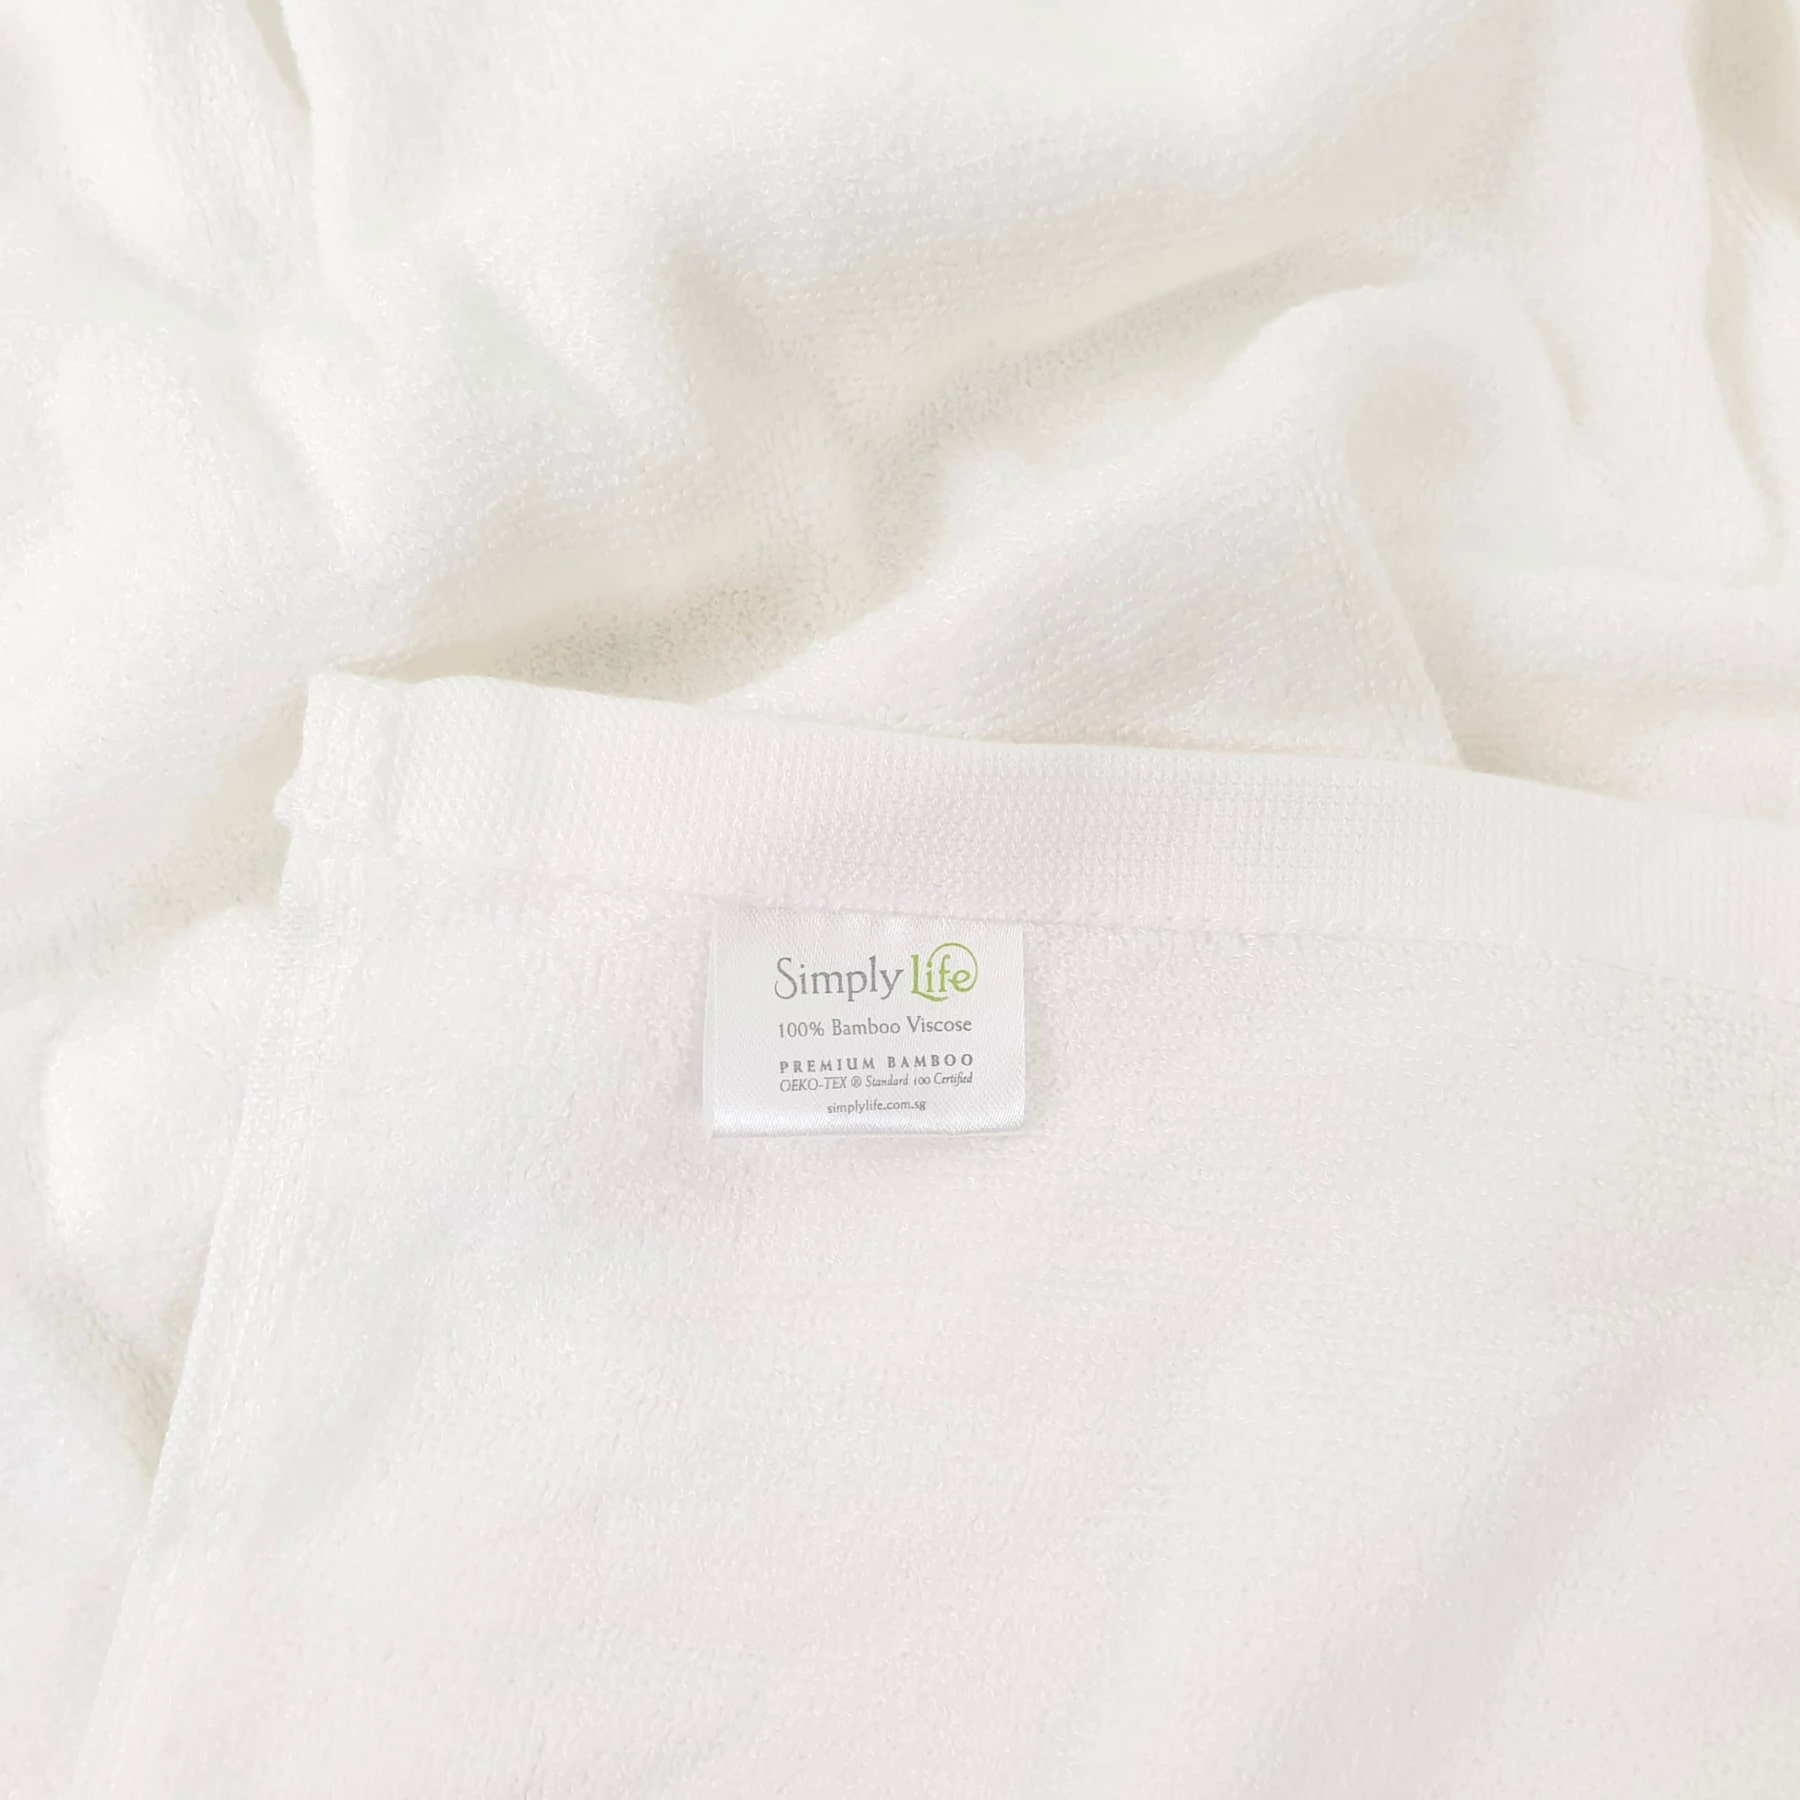 Simply Life Premium Bamboo Wash Face Cloth (5pcs/Set) Bundles of 2 pack